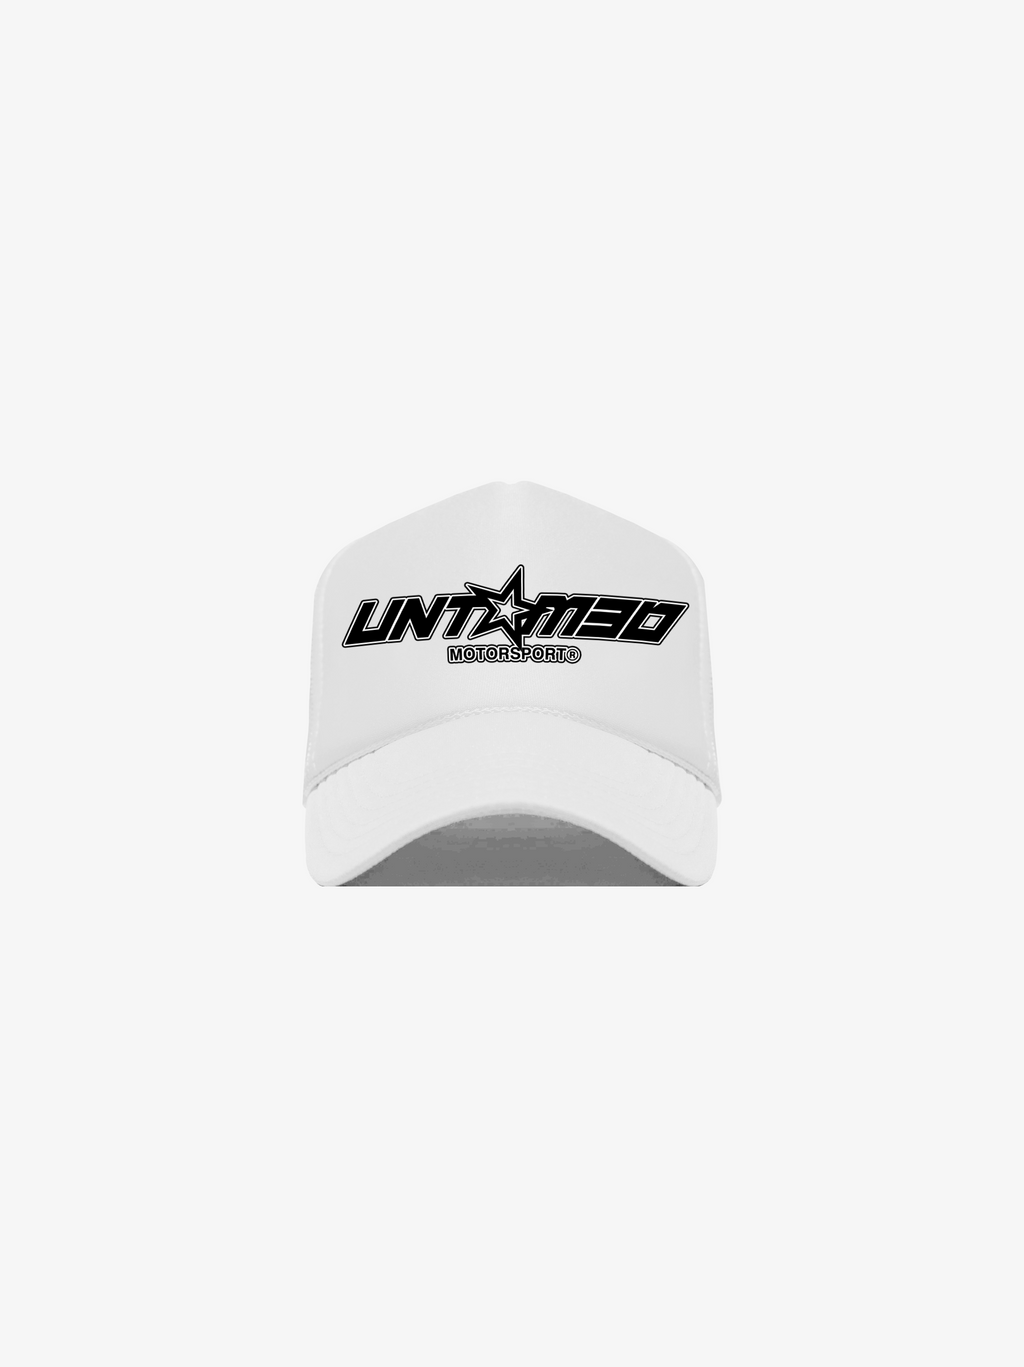 Untamed Motorsport Wht Trucker Hat